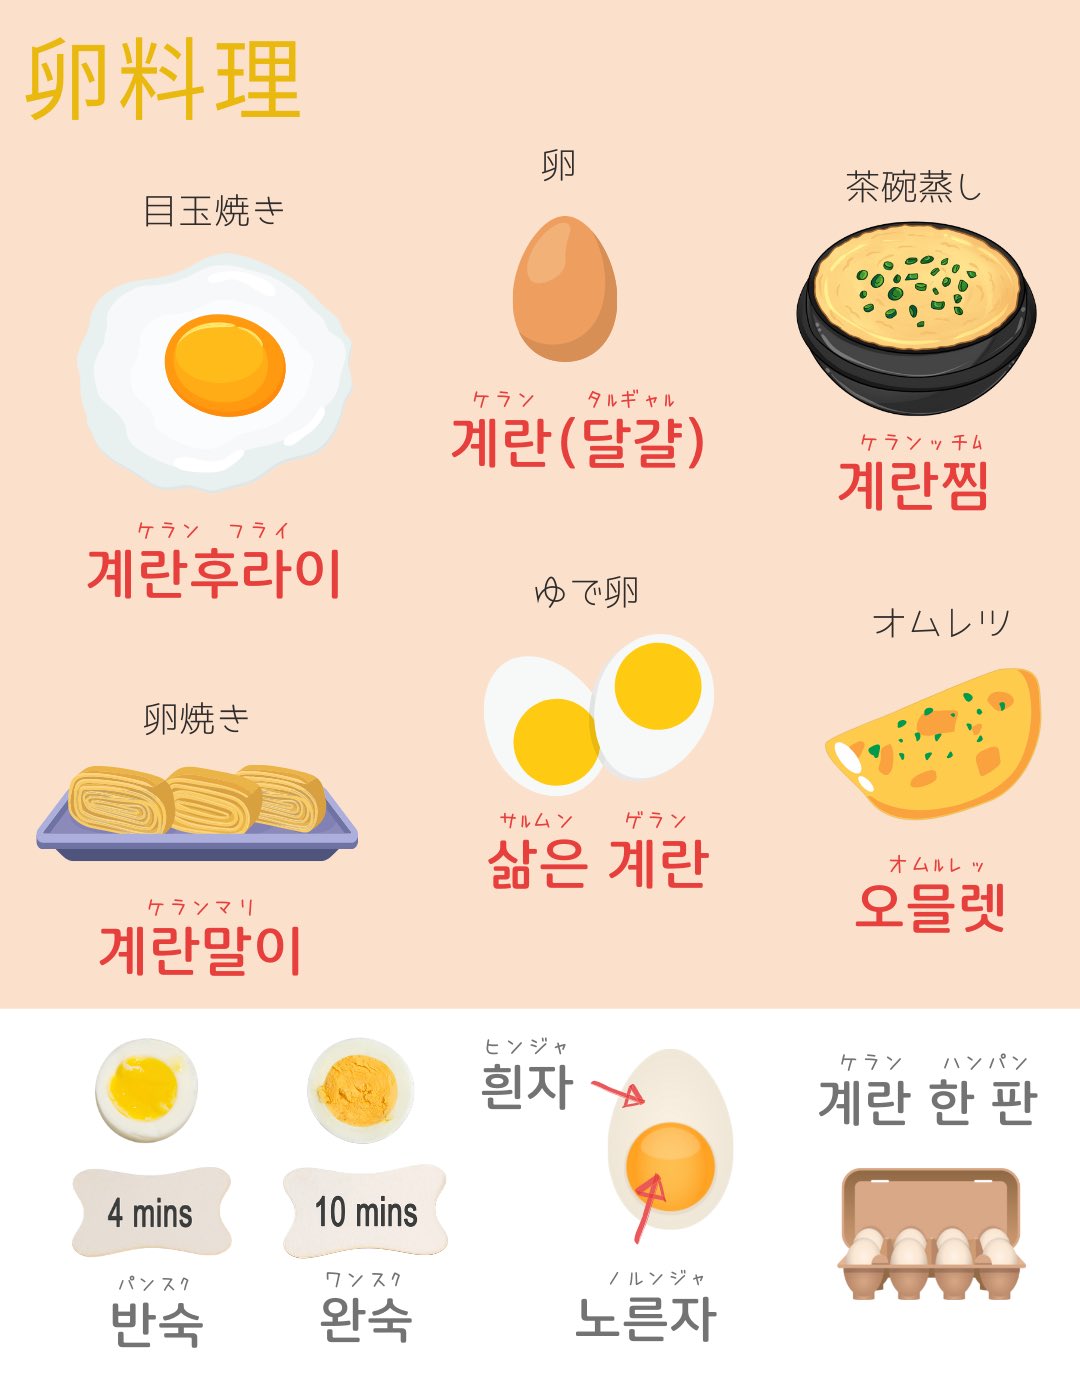 Twitter 上的 たろんの韓国語 卵 料理 계란 요리 の韓国語 계란후라이 目玉焼き 正しい表記は계란프라이 T Co 4zj4d6wz1u Twitter